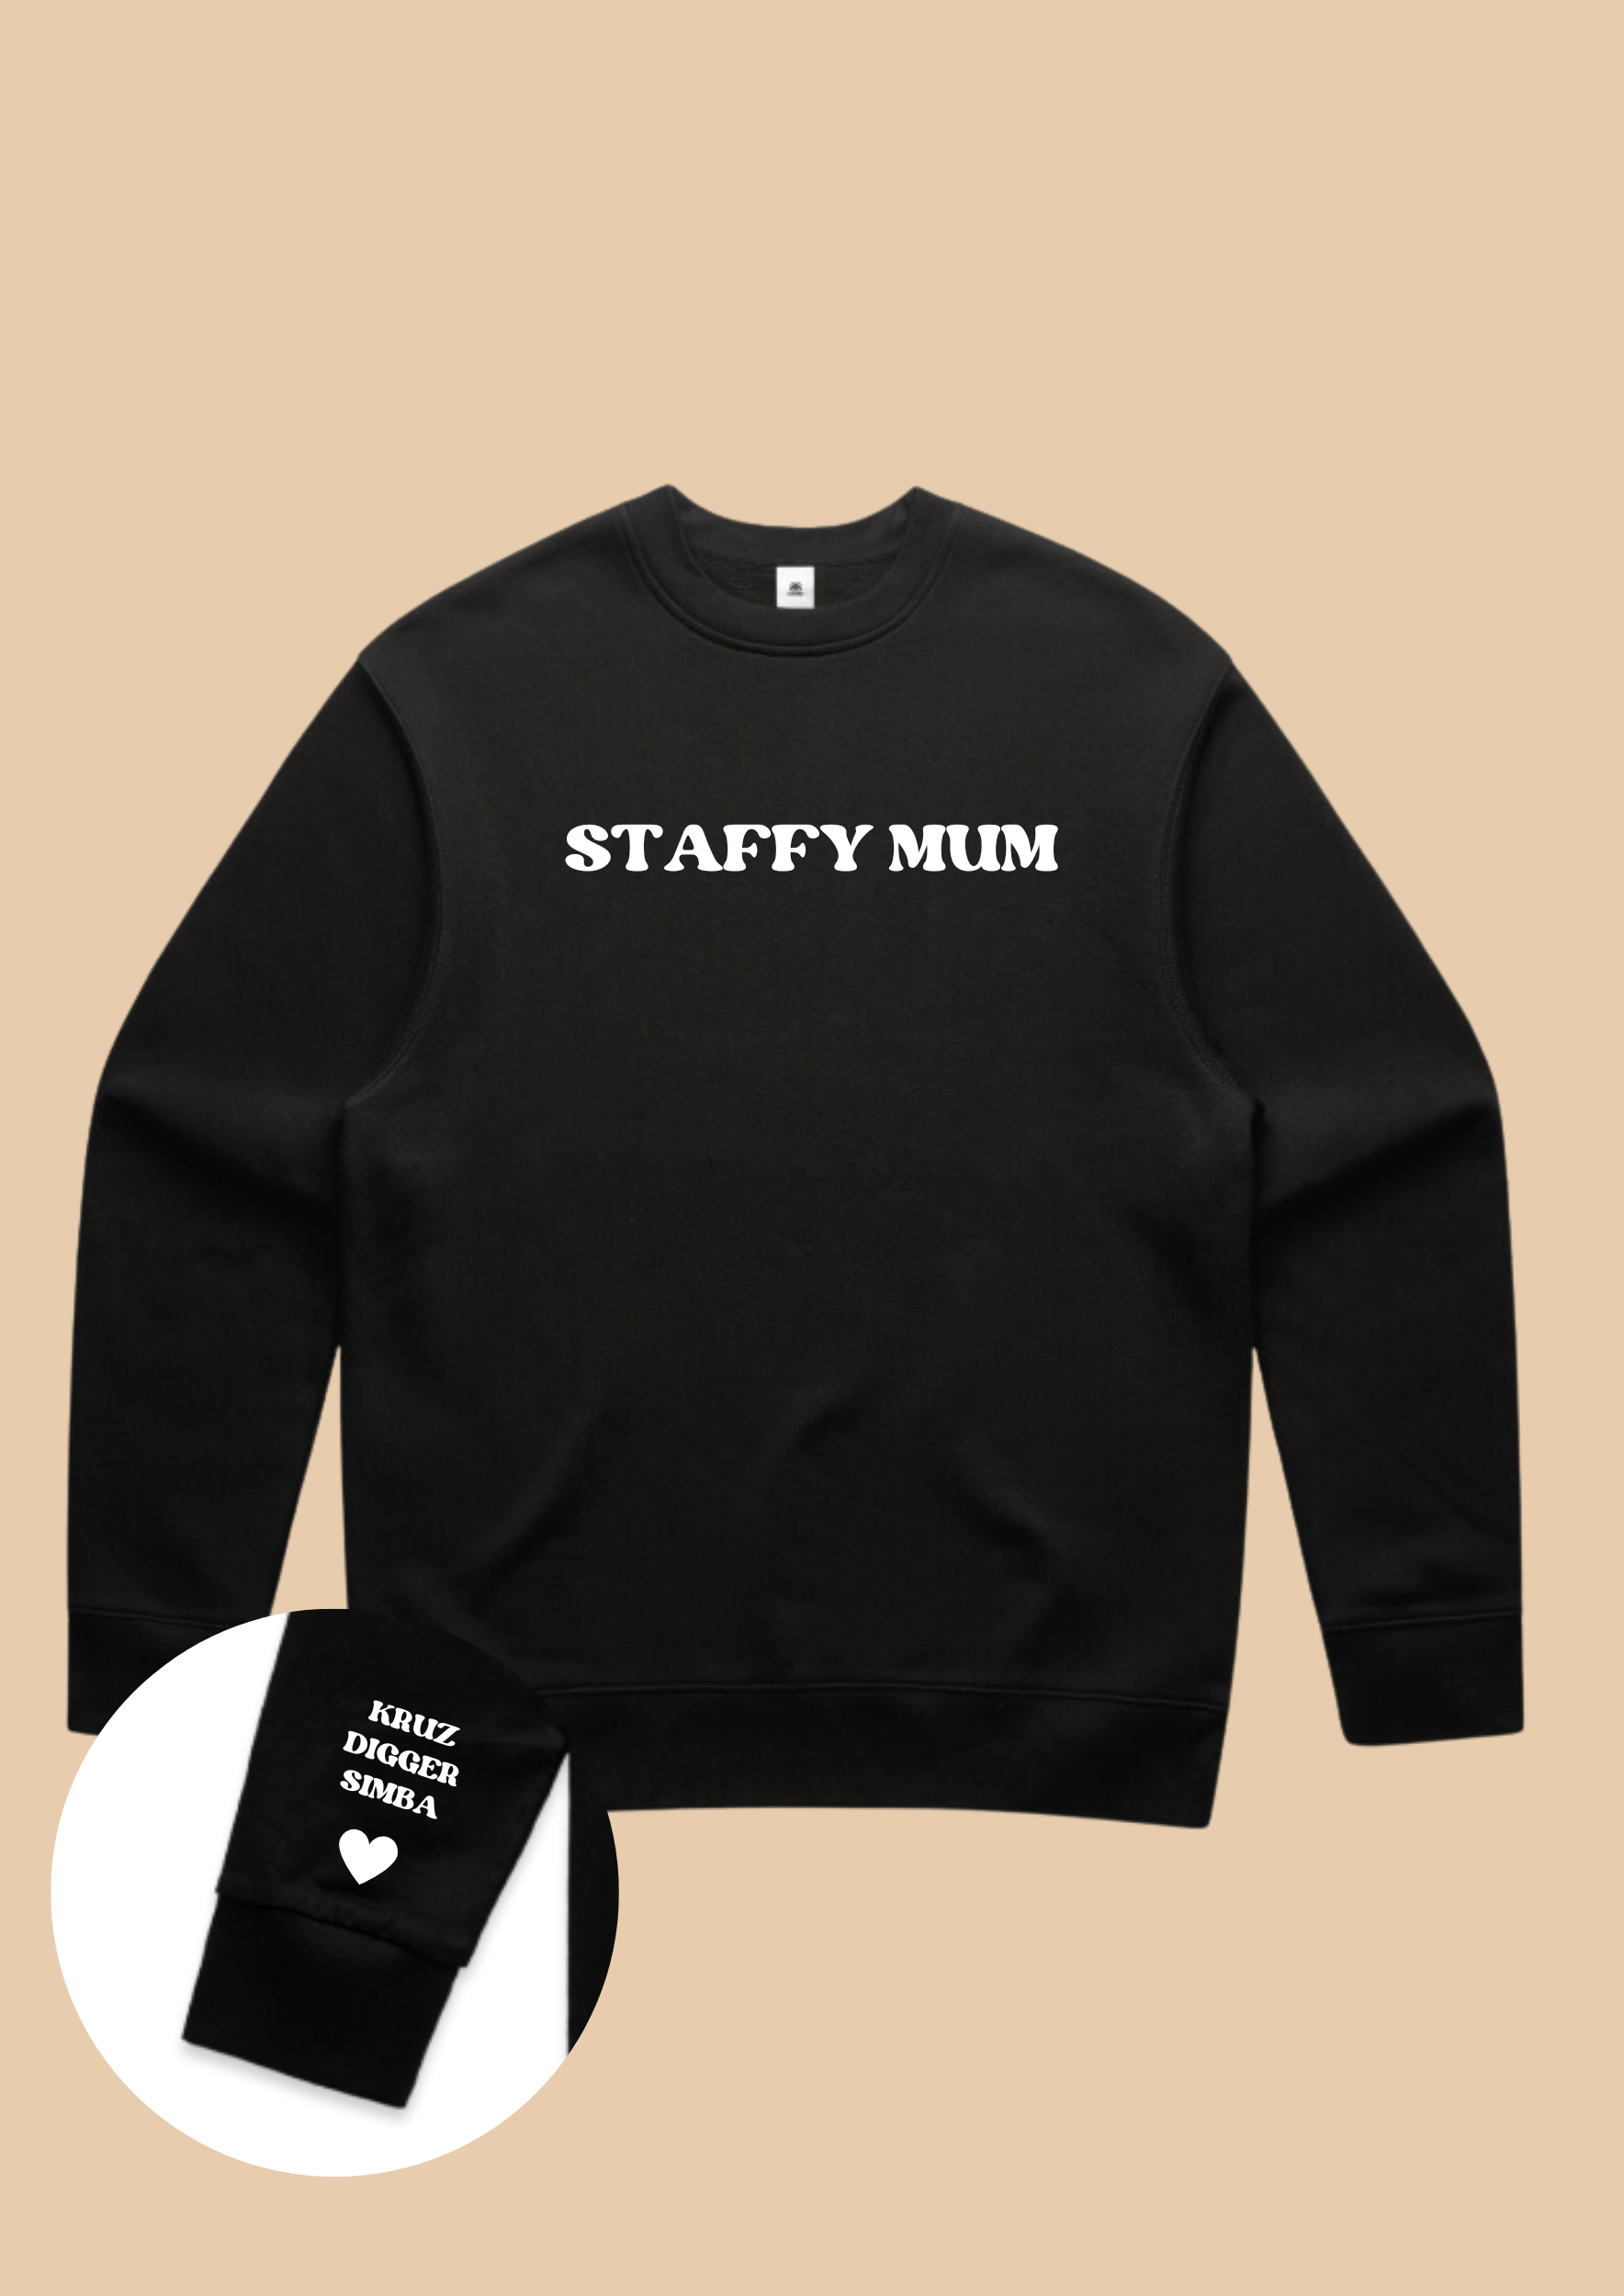 dog mum quote crew dog lover crew neck sweatshirt jumper customisable custom dog mum